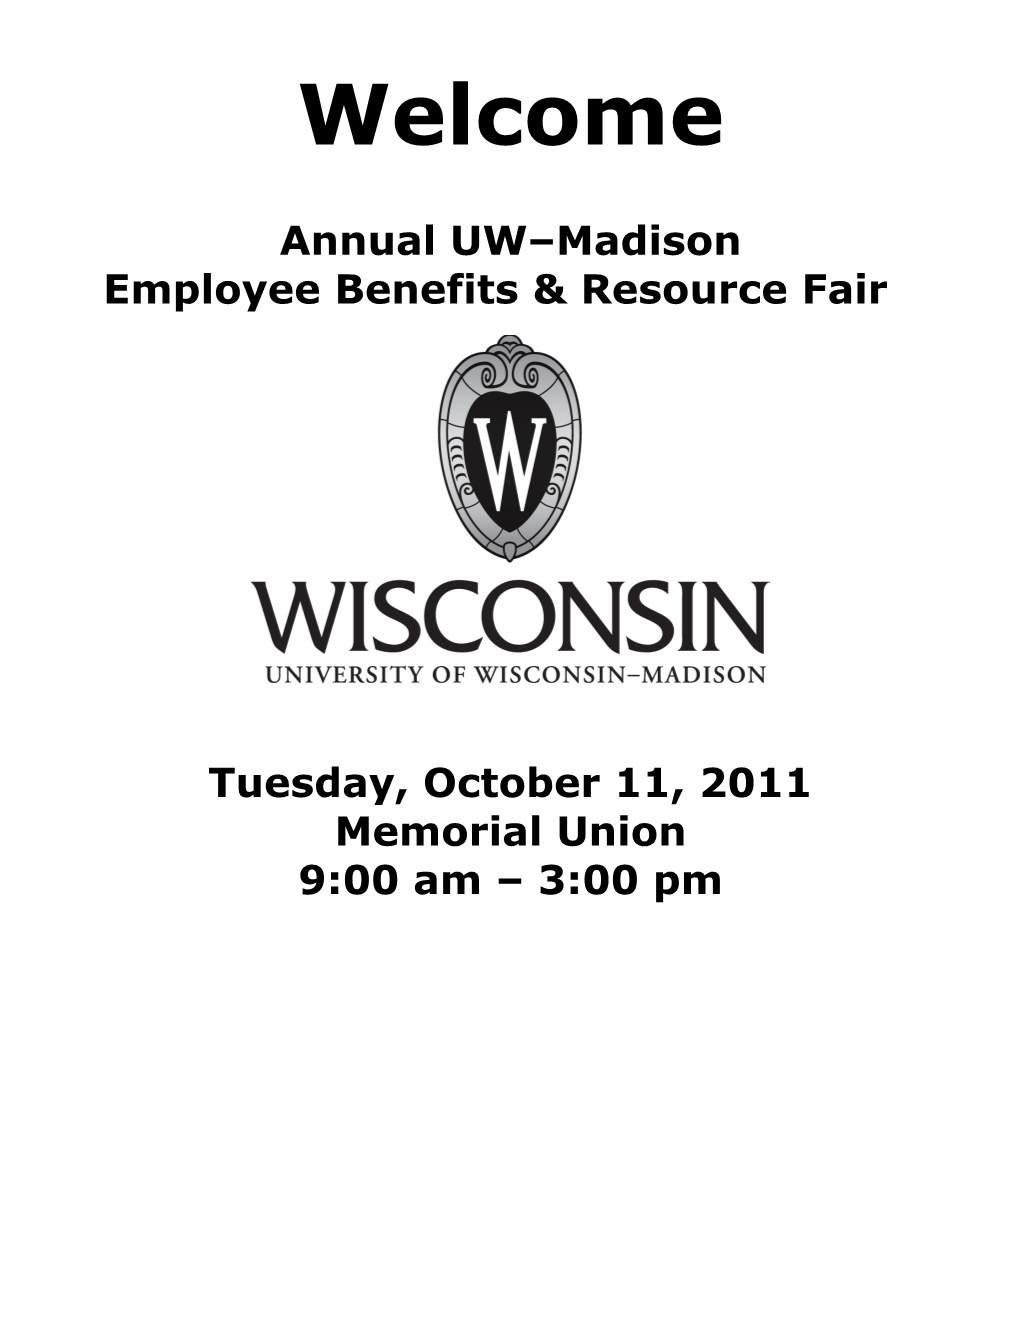 UW-Madison Employee Benefits and Resource Fair